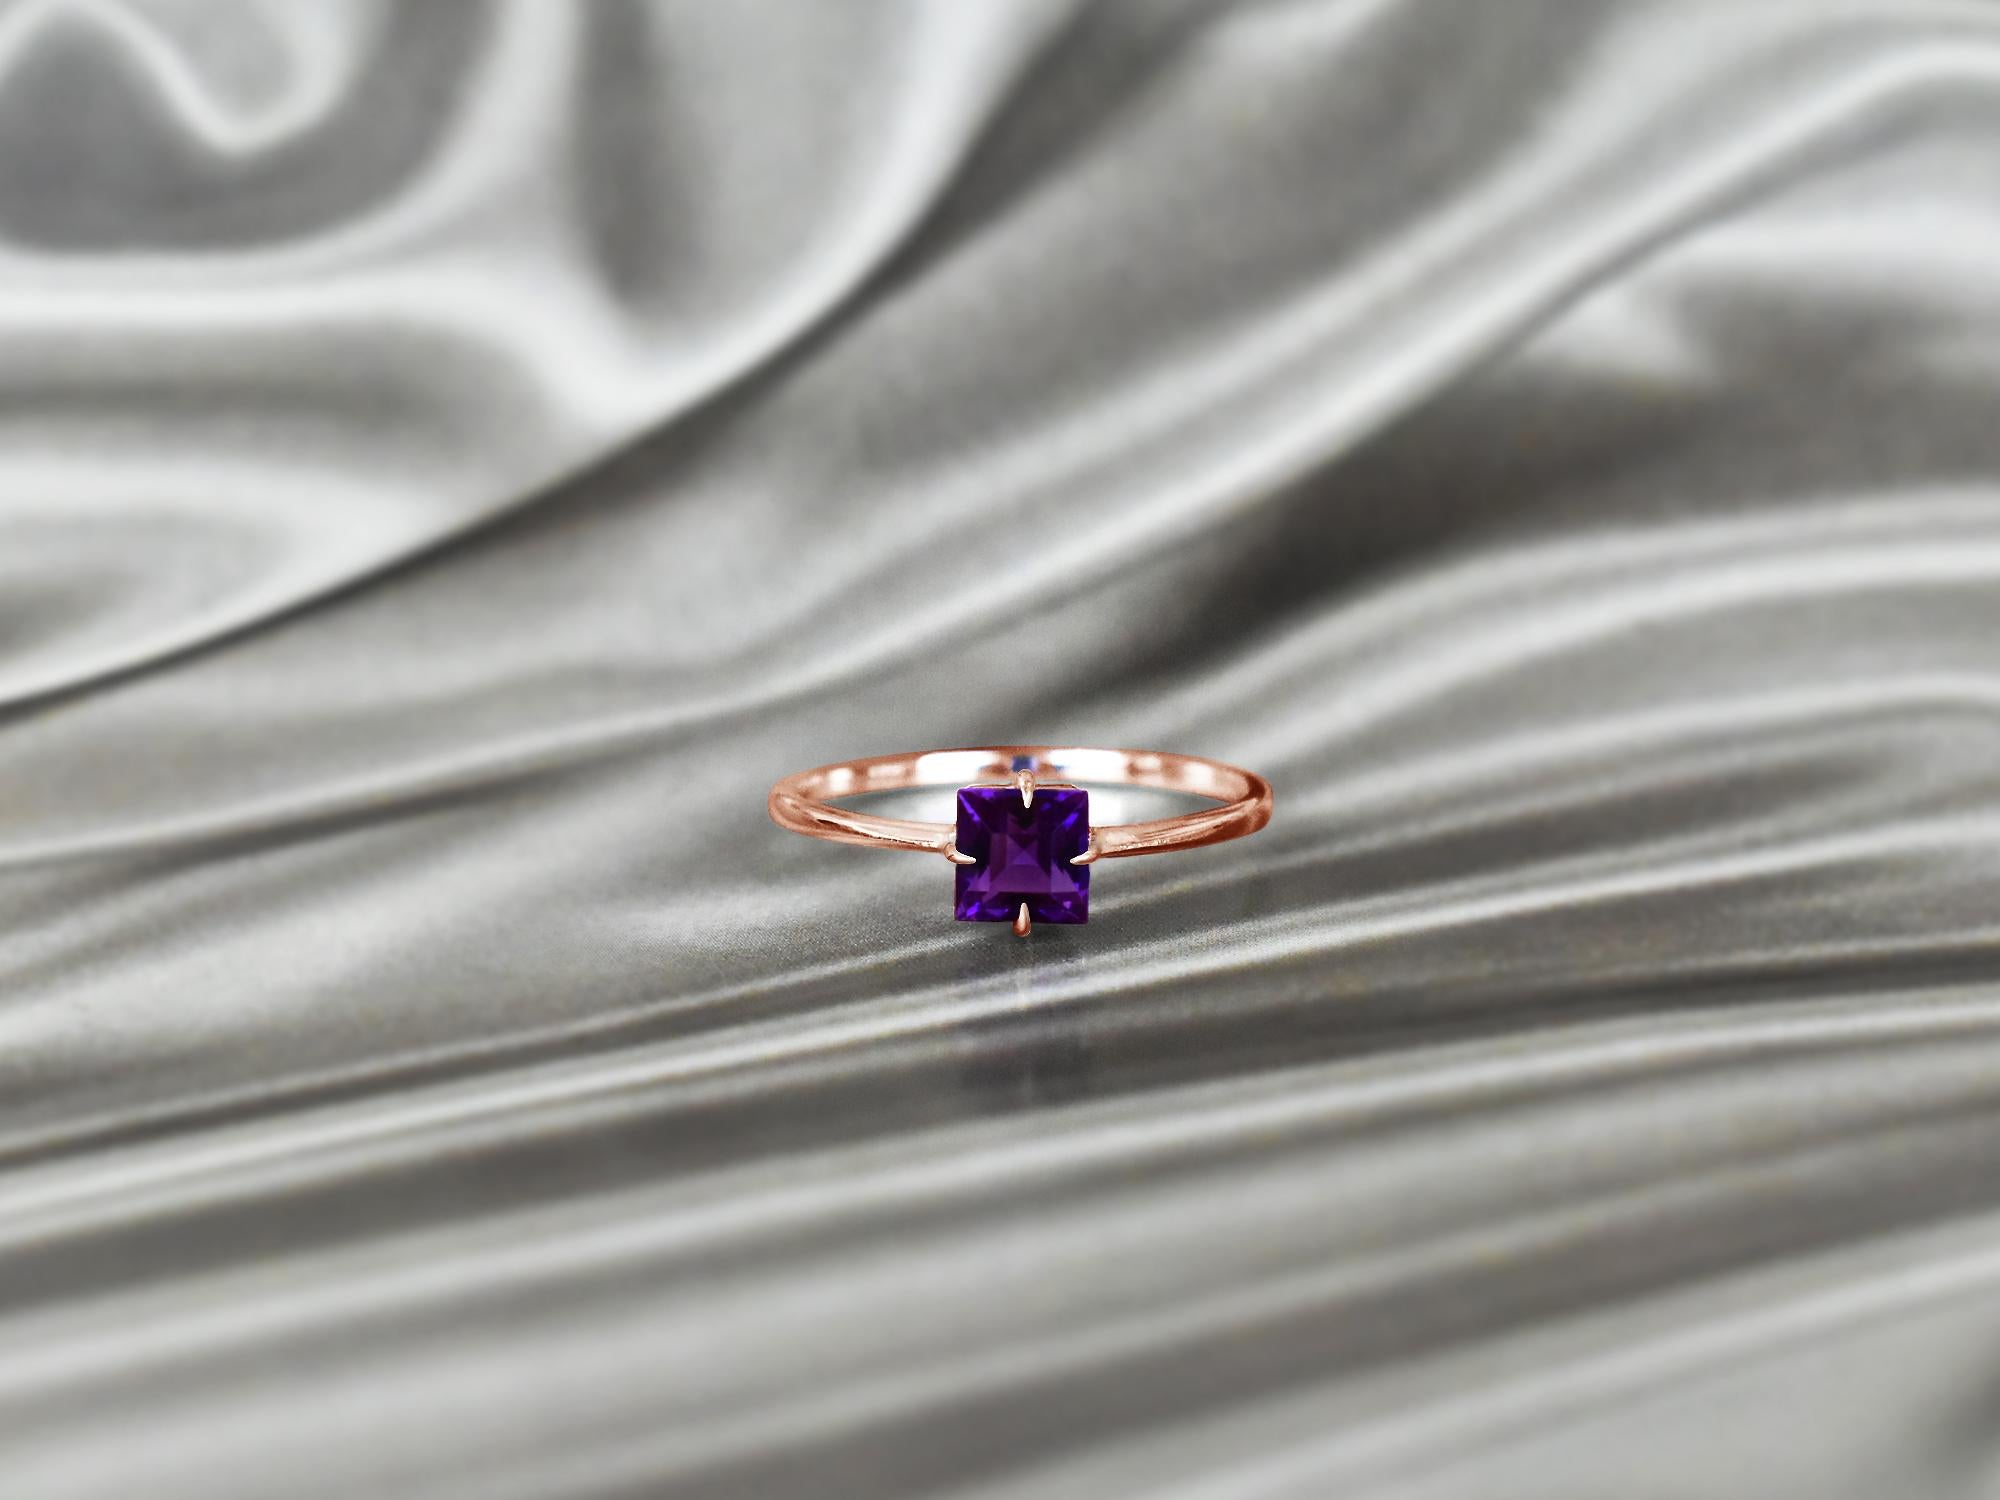 For Sale:  14k Gold Princess Cut 5x5 mm Princess Cut Gemstone Ring Gemstone Engagement Ring 2